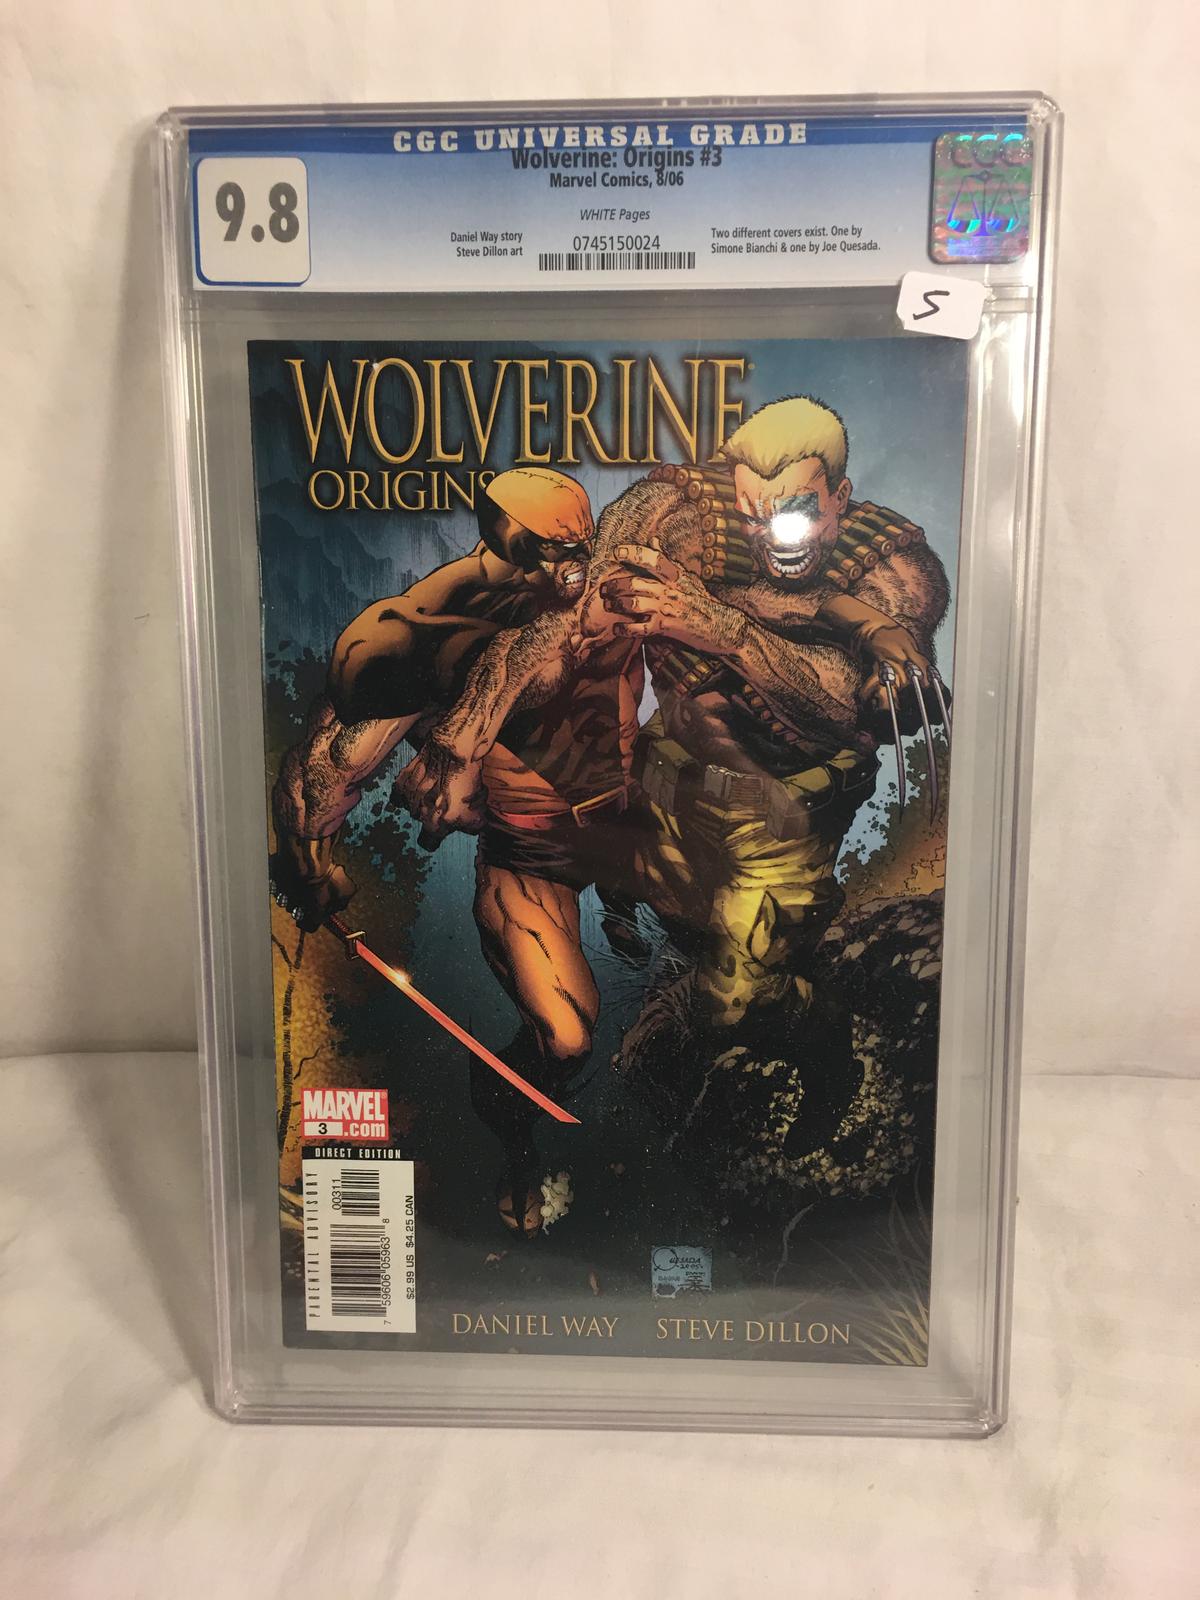 Collector CGc Universal Grade Wolverine Origins #3 Marvel Comics 8/06 Graded 9.8